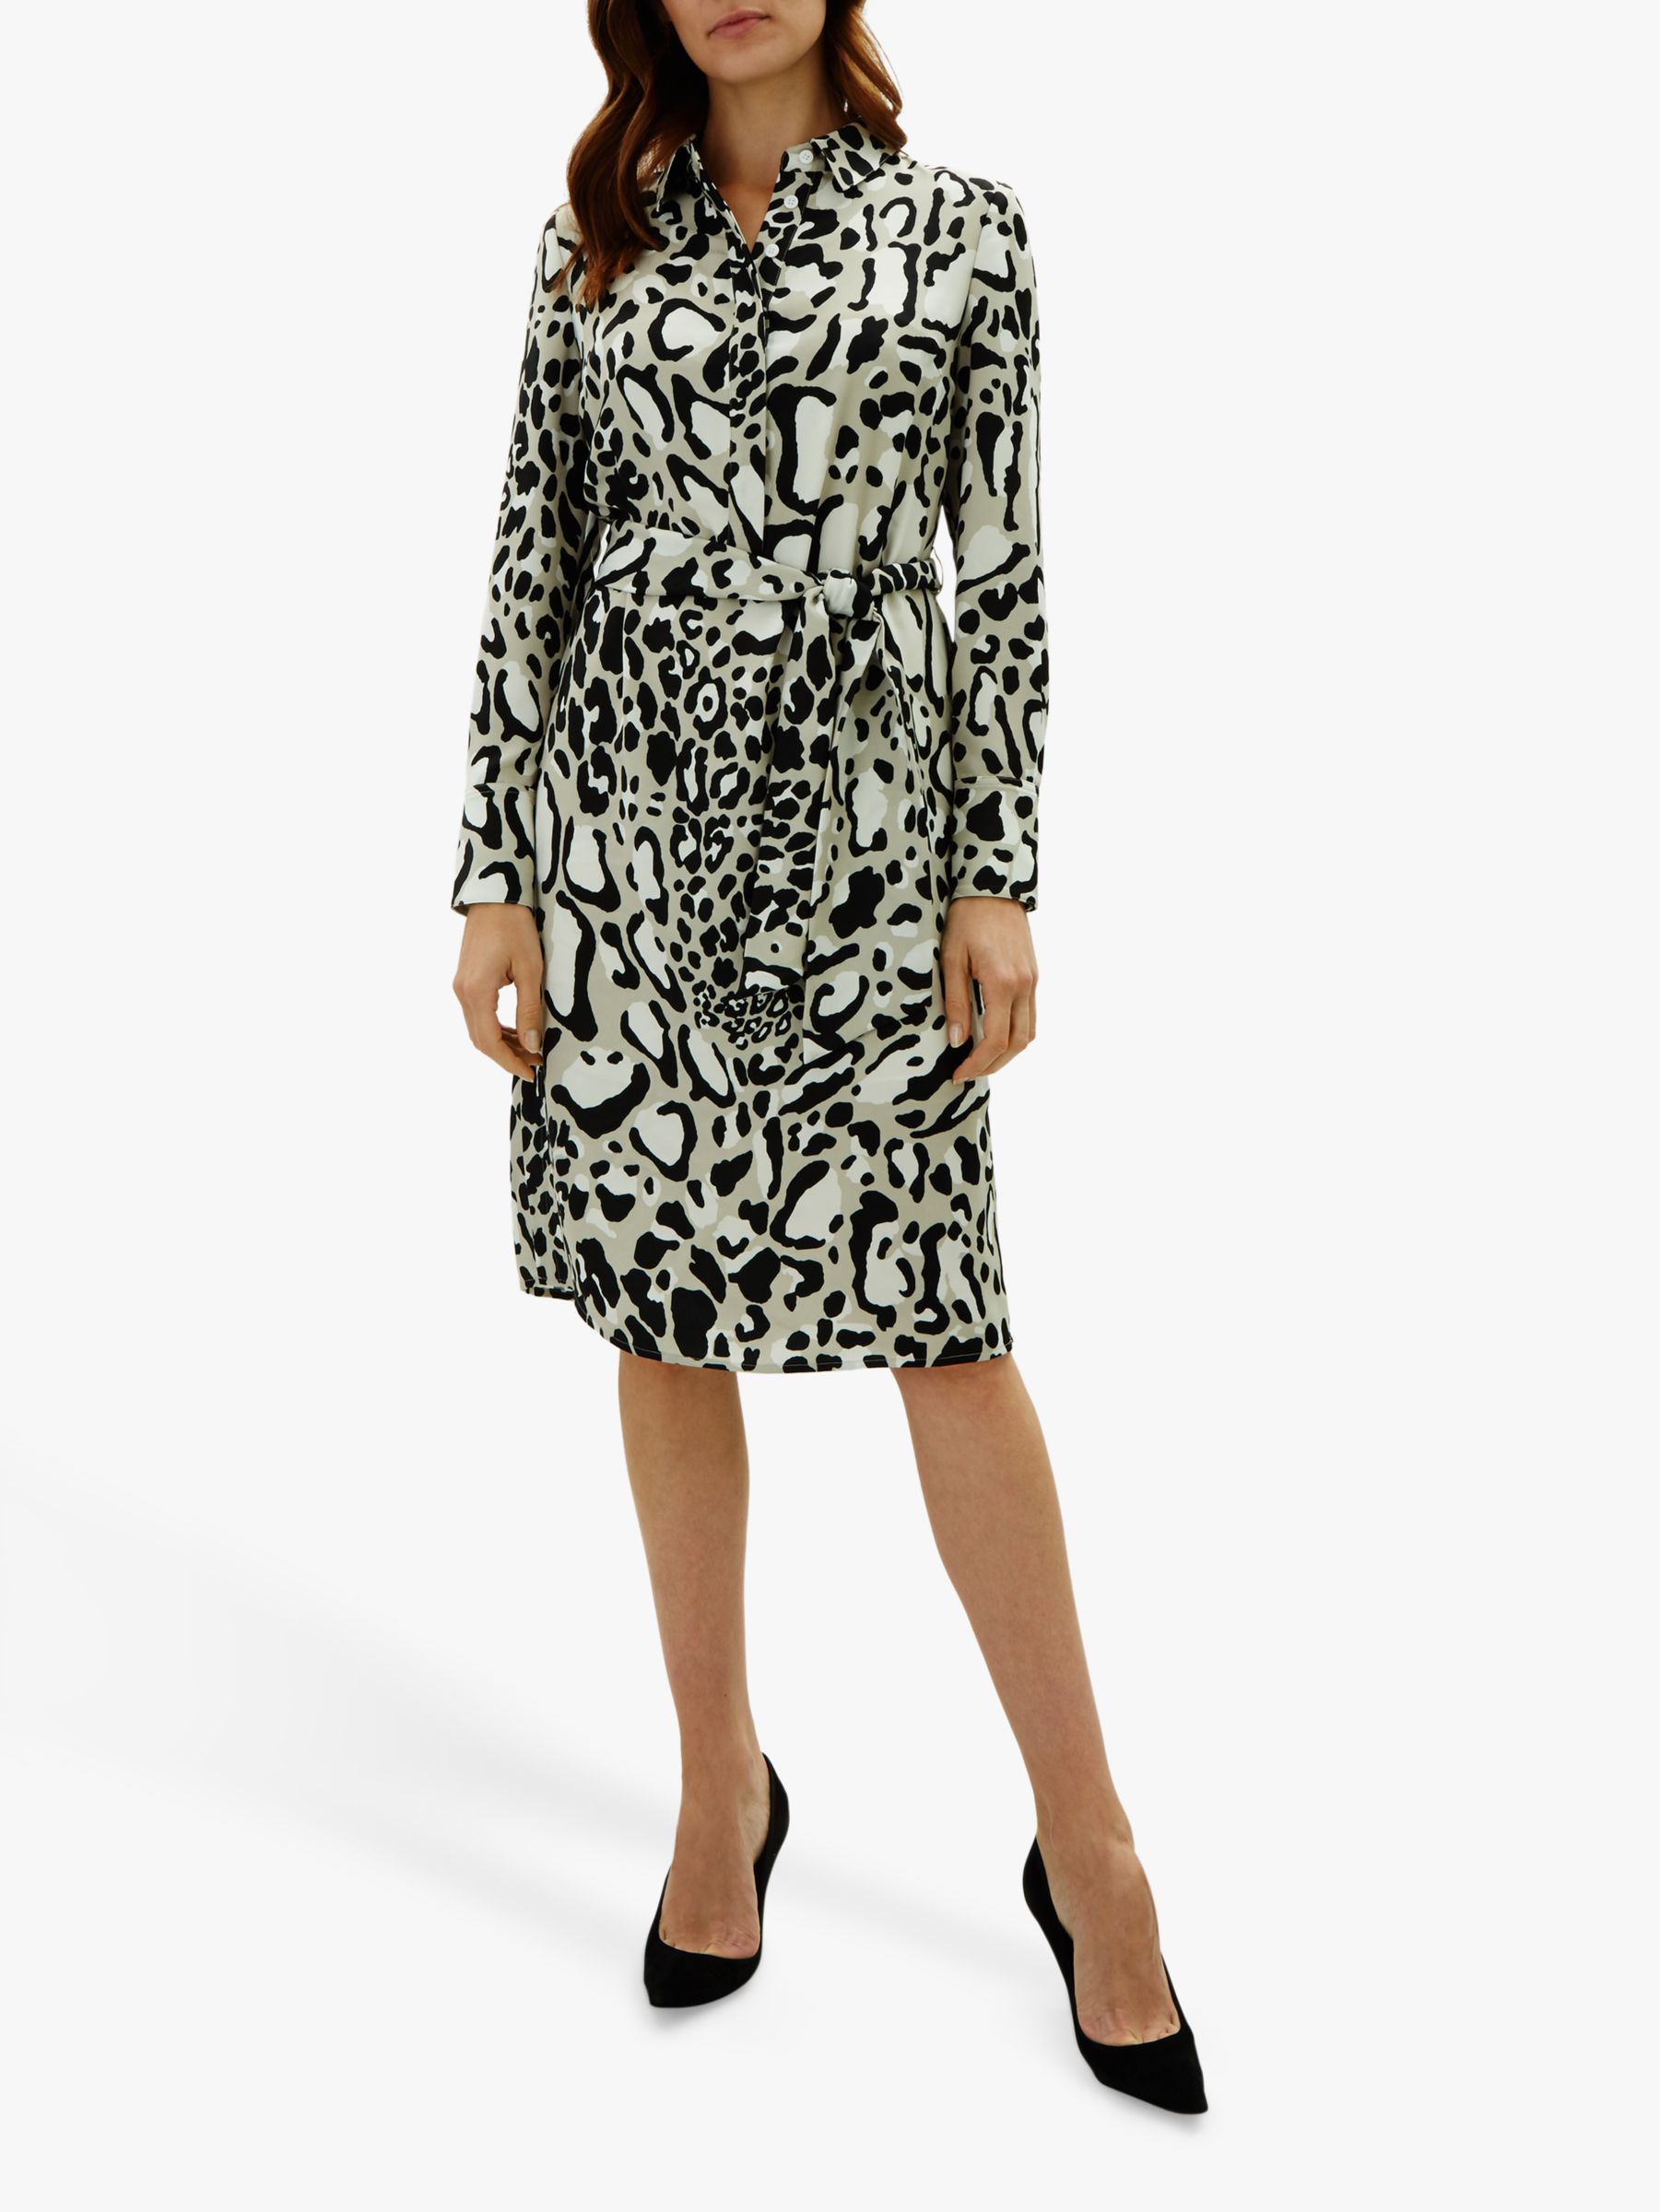 jaeger leopard print dress